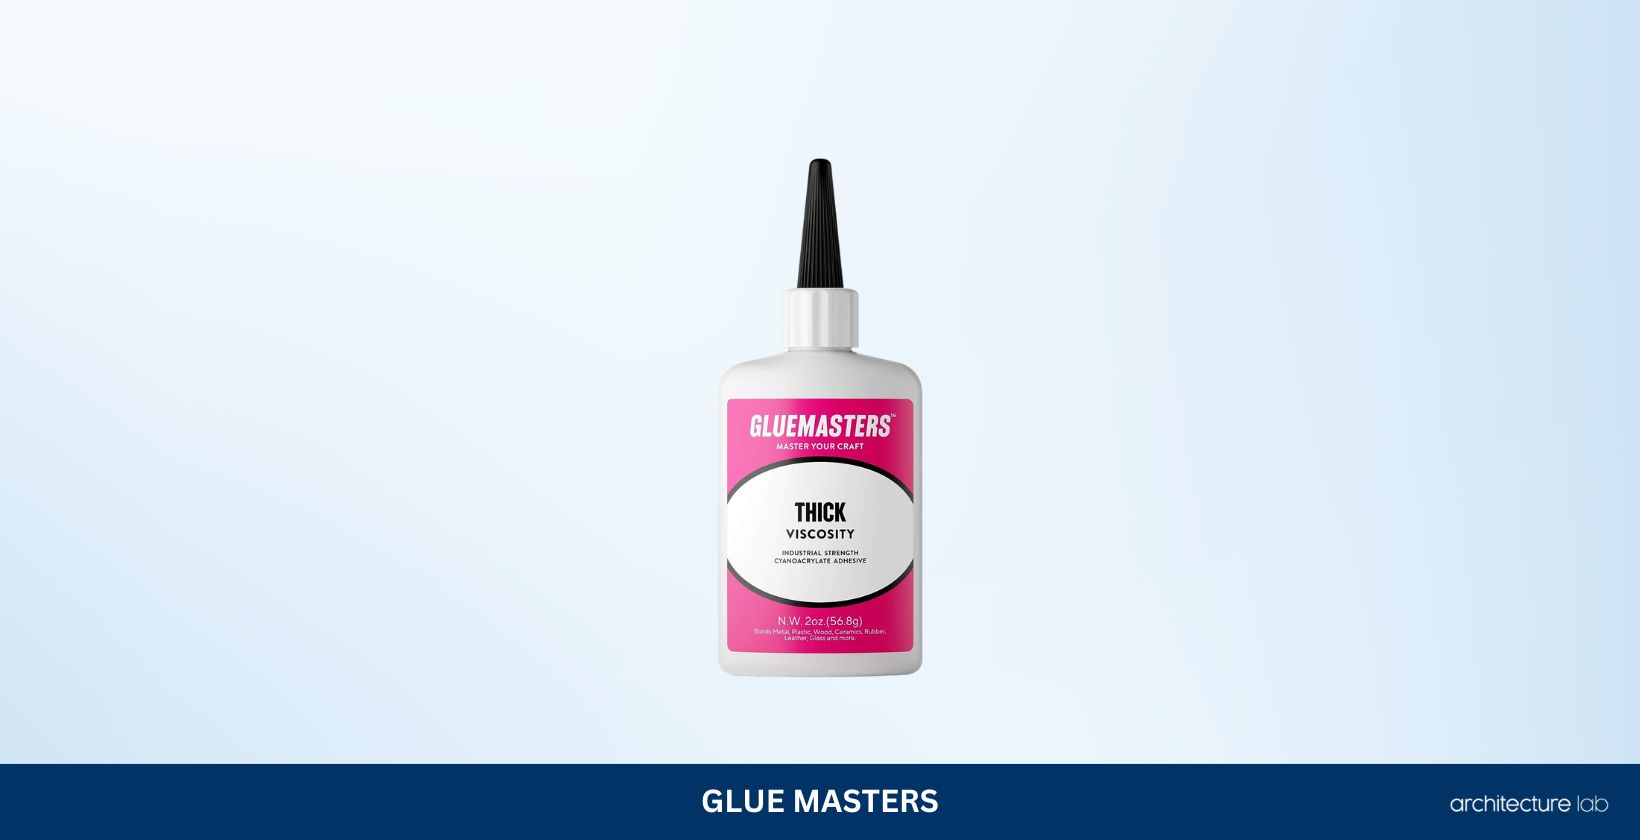 Glue masters